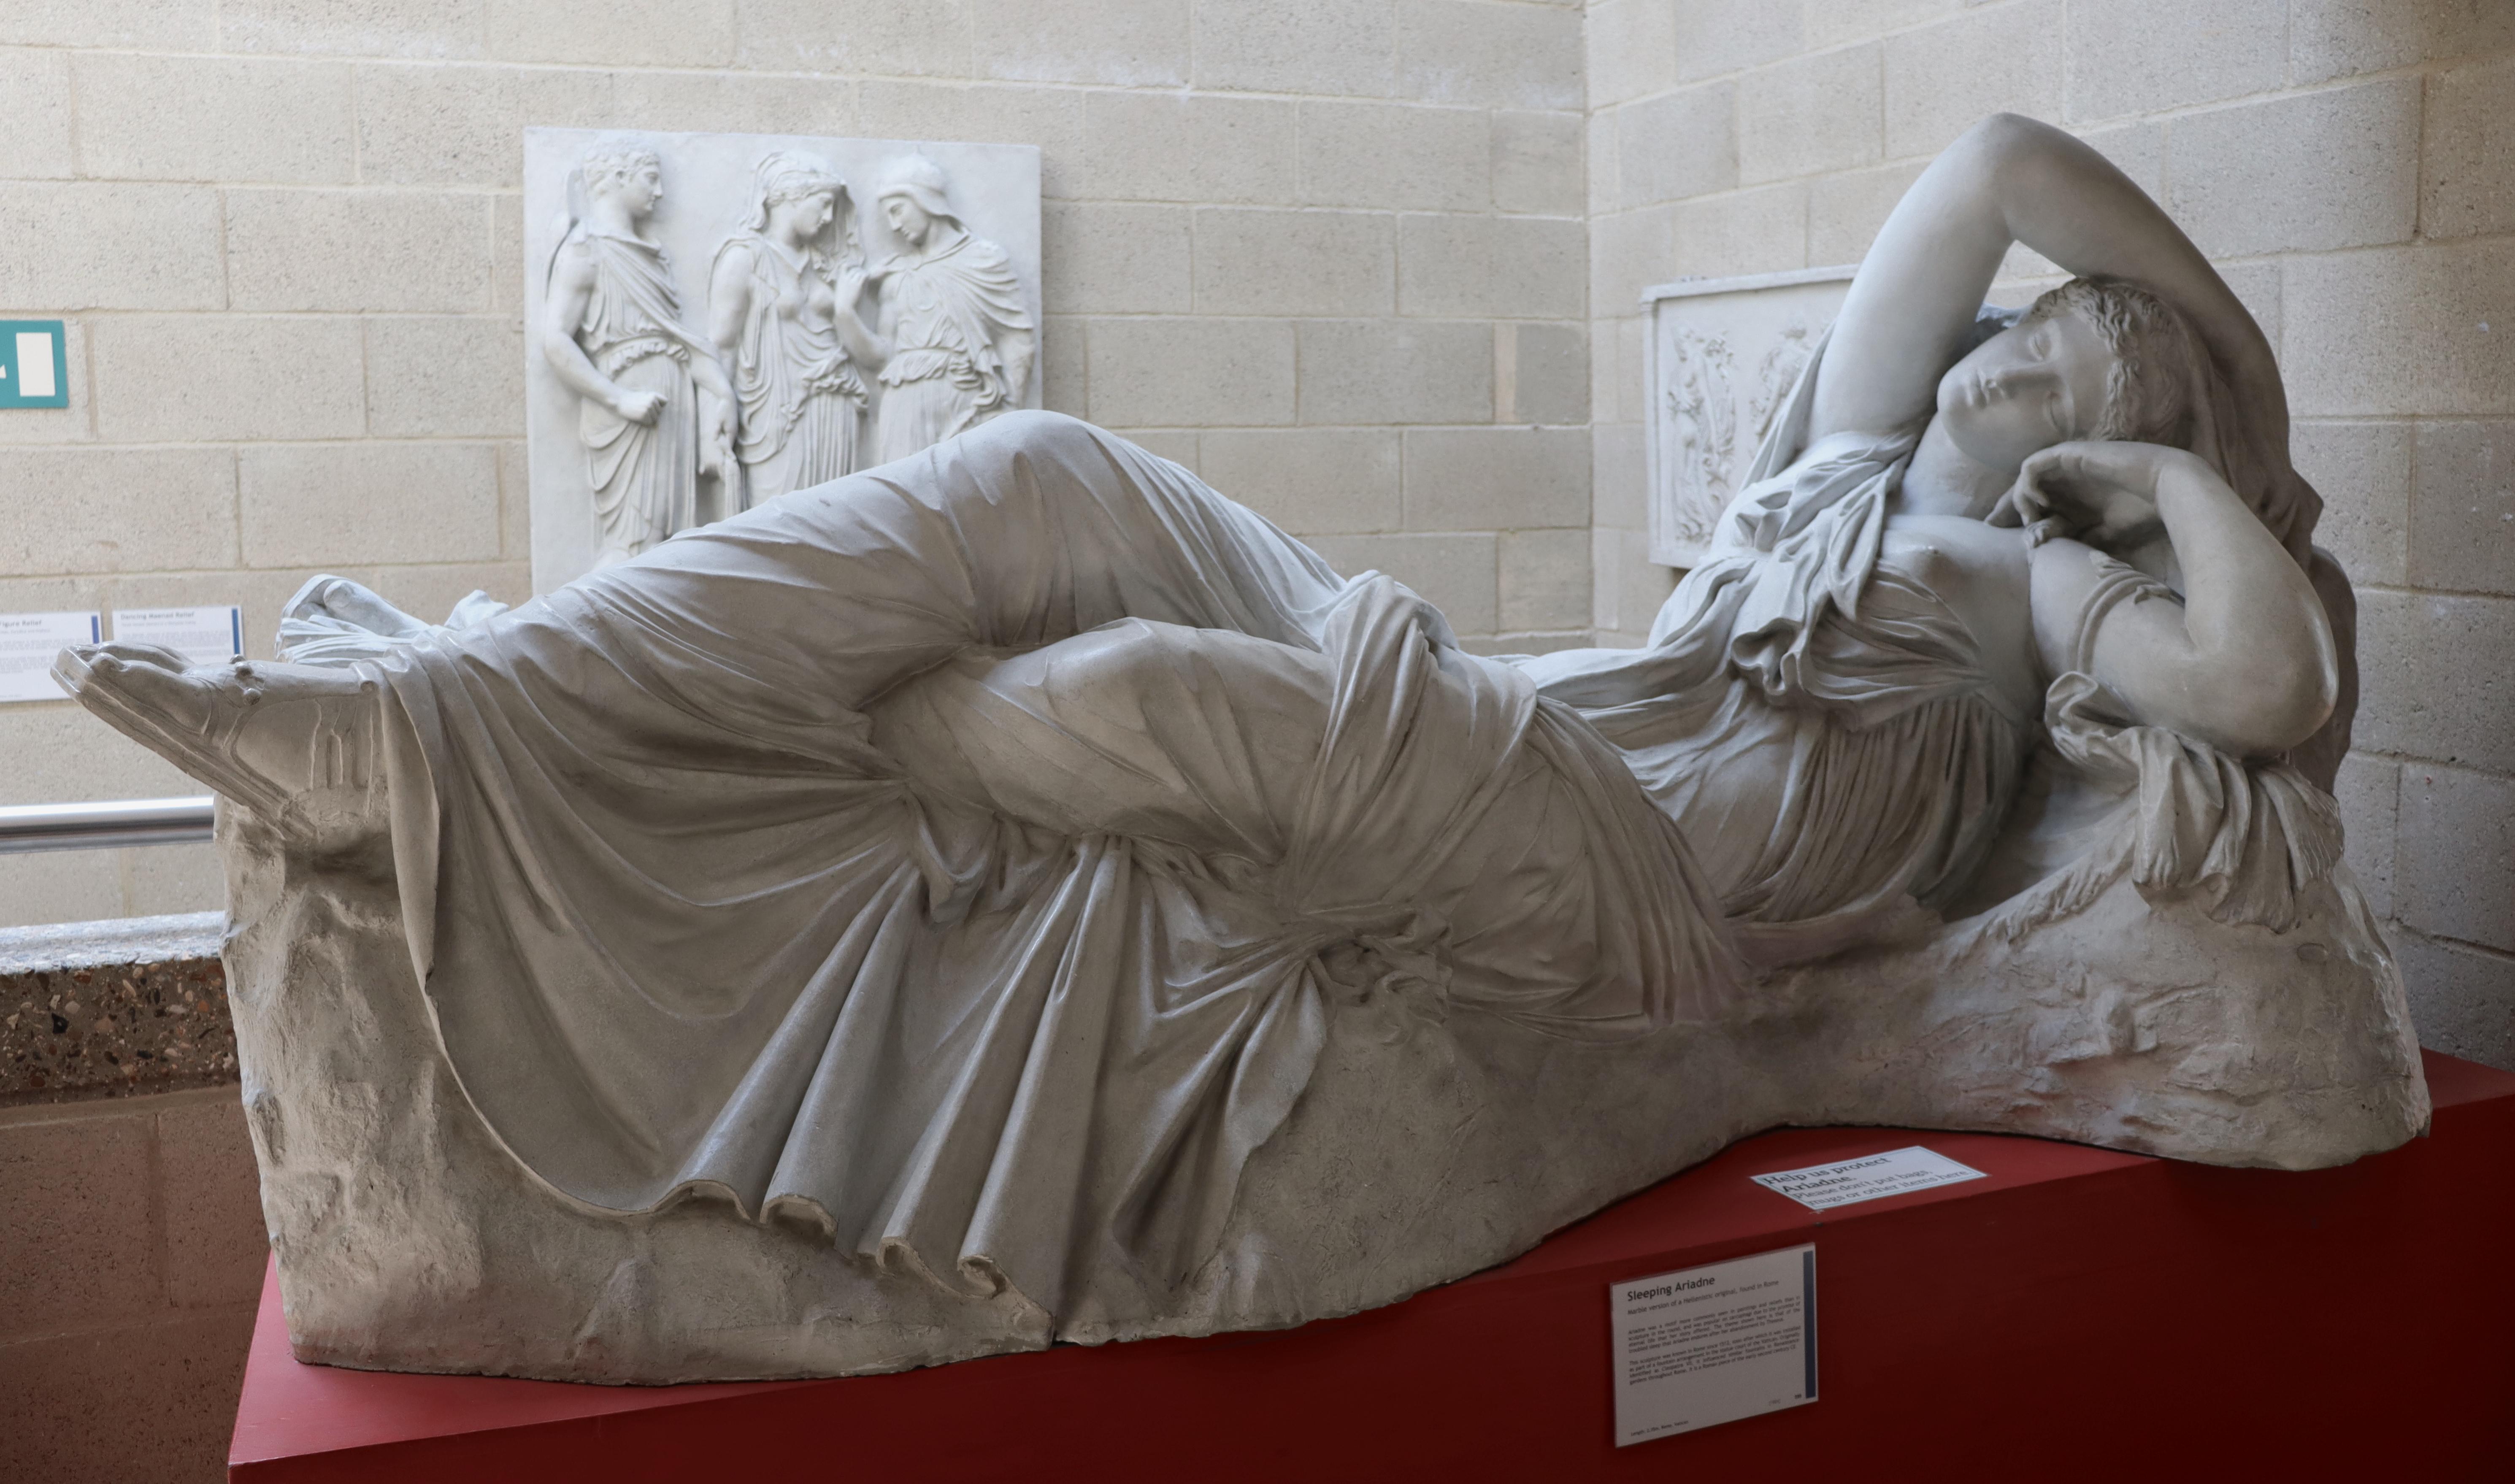 Statue of sleeping demale figure